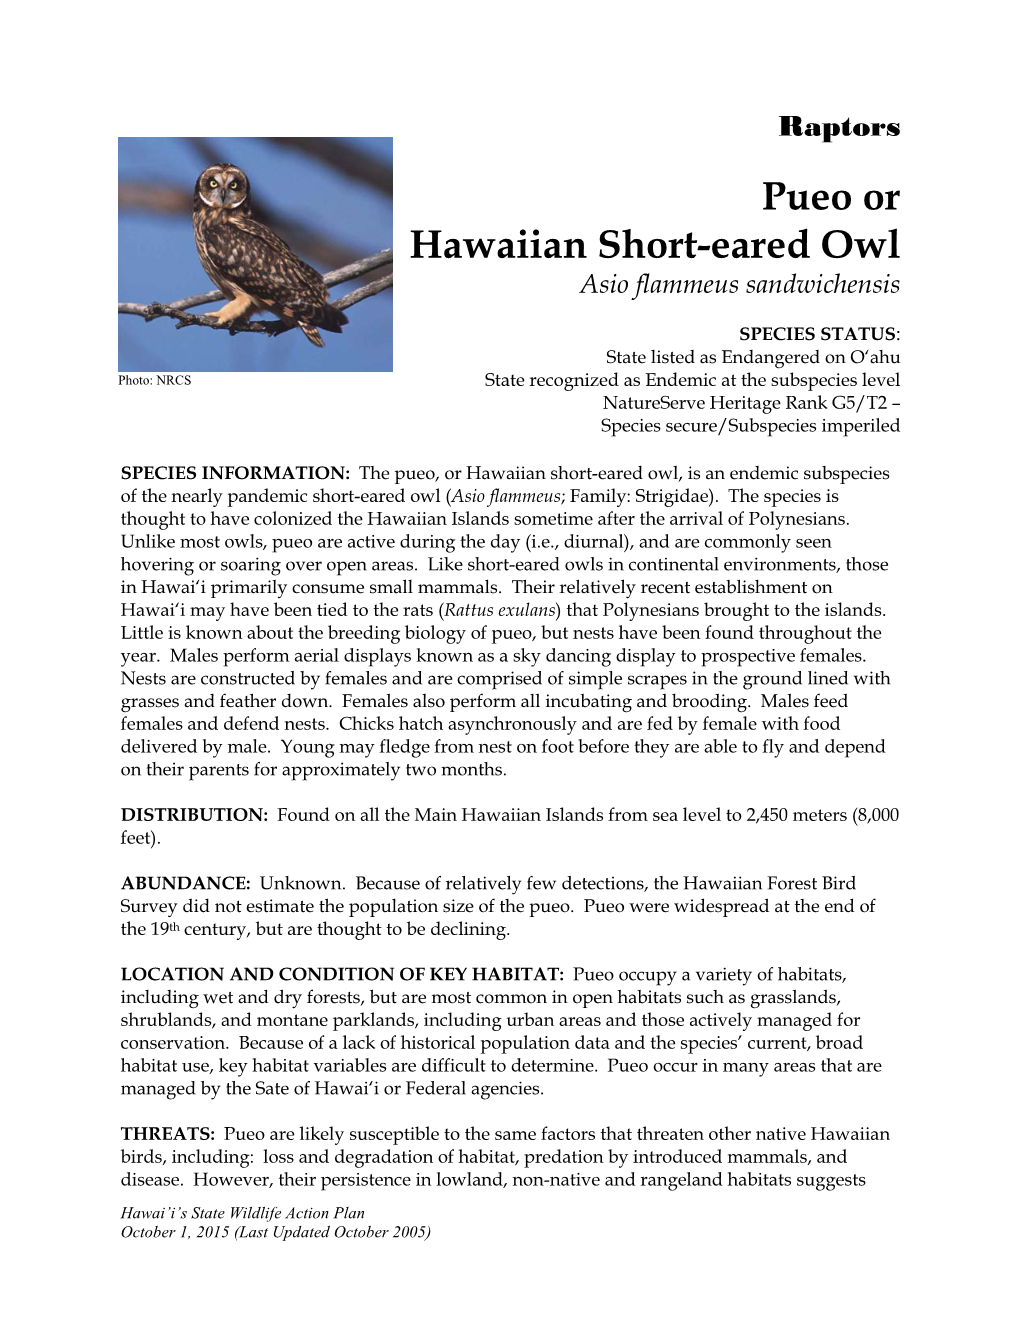 Pueo Or Hawaiian Short-Eared Owl Asio Flammeus Sandwichensis